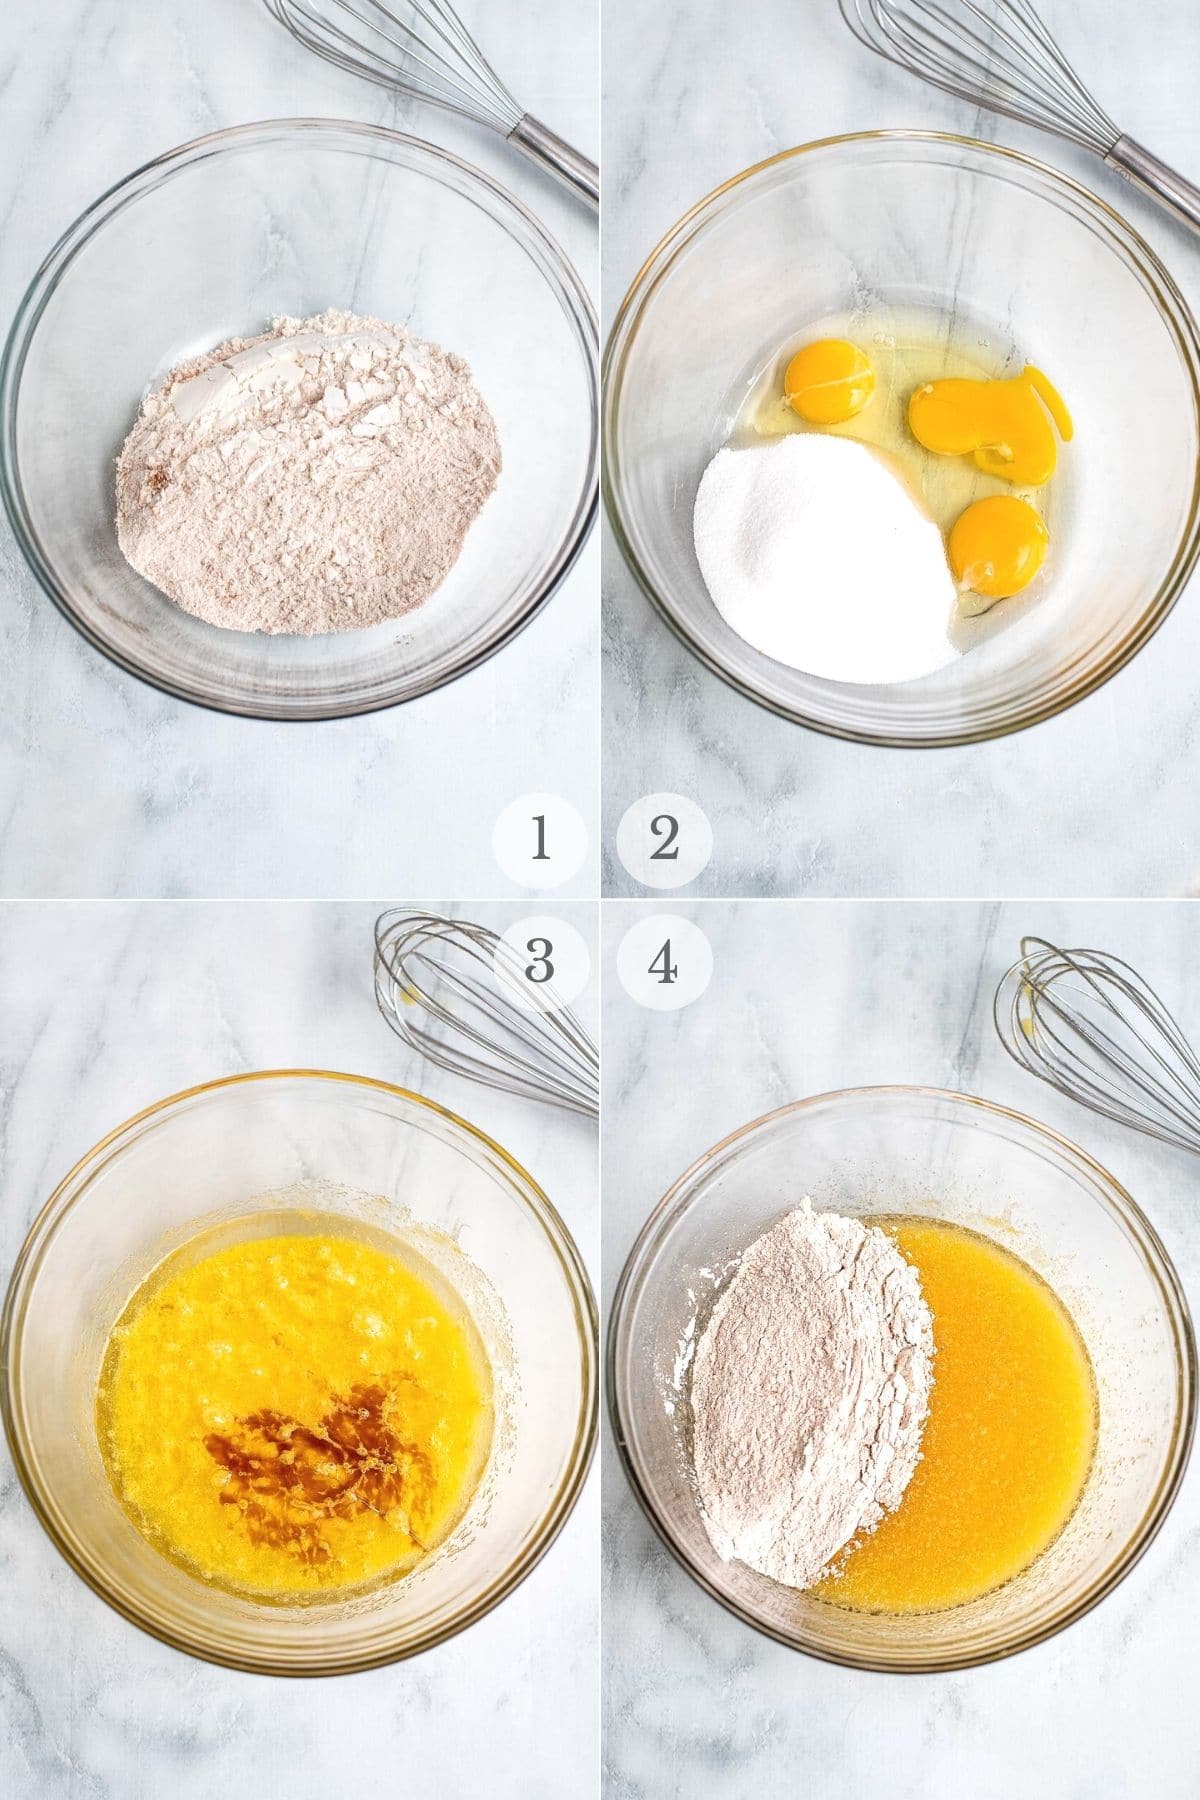 carrot loaf cake recipe steps 1-4